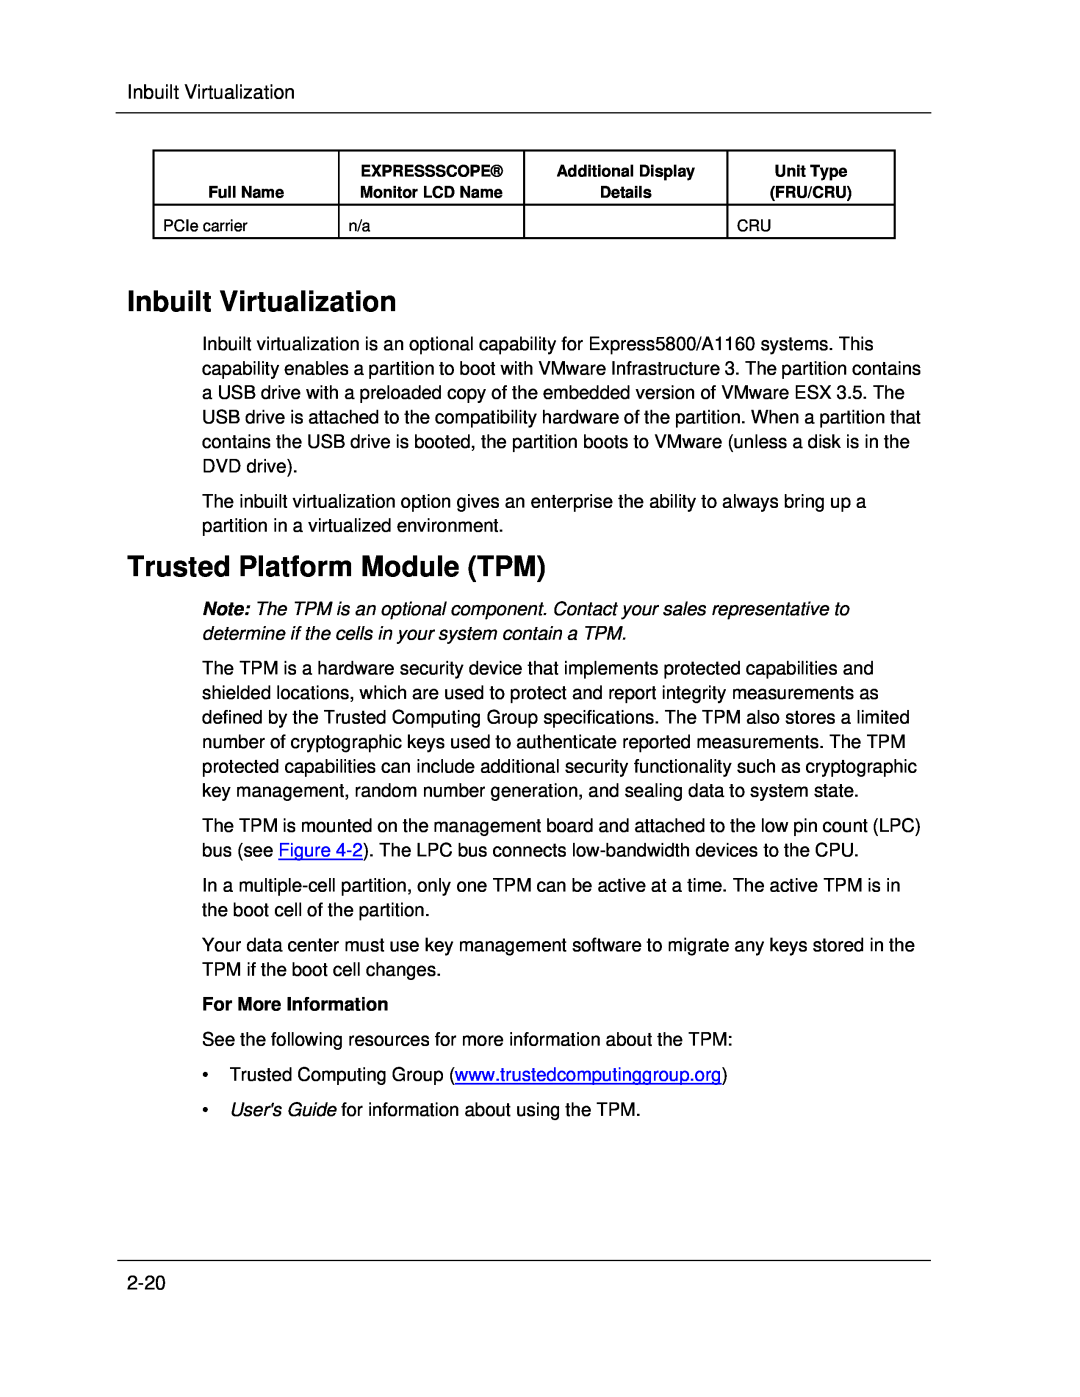 NEC A1160 manual Inbuilt Virtualization, Trusted Platform Module TPM, 2-20, For More Information 